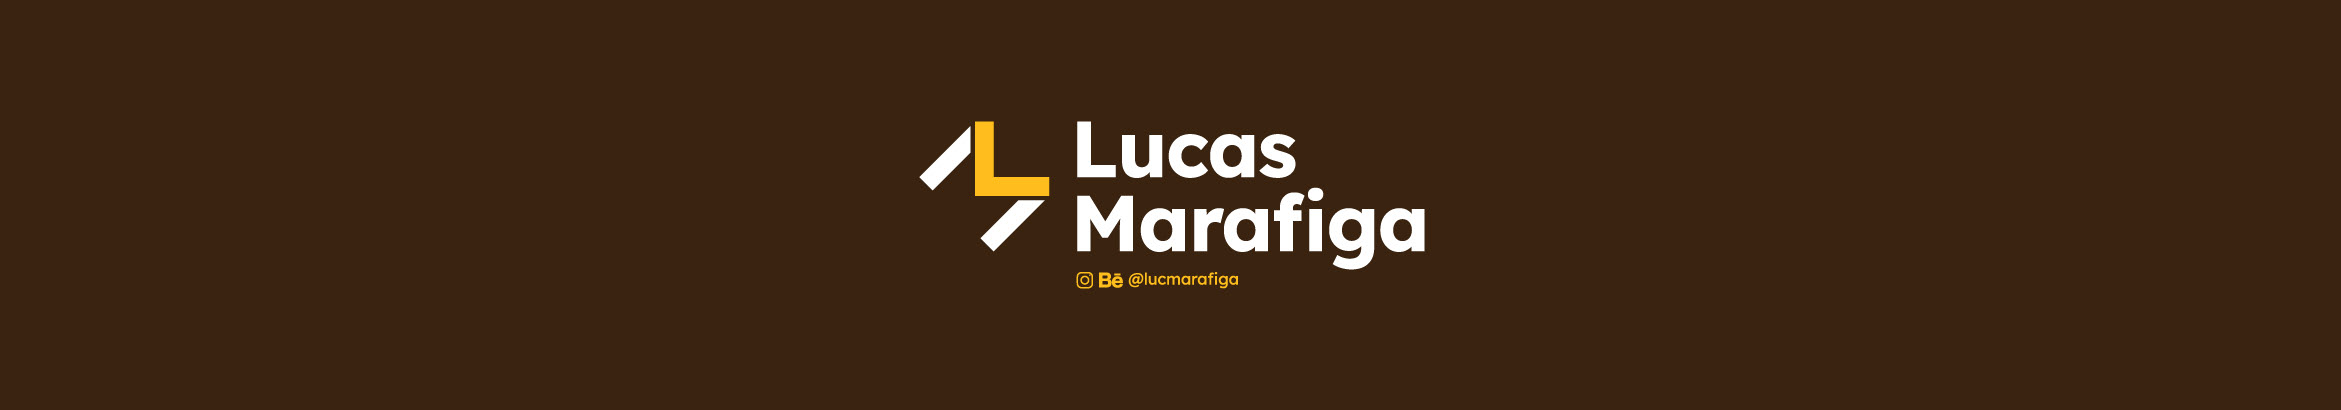 Banner de perfil de Lucas Marafiga